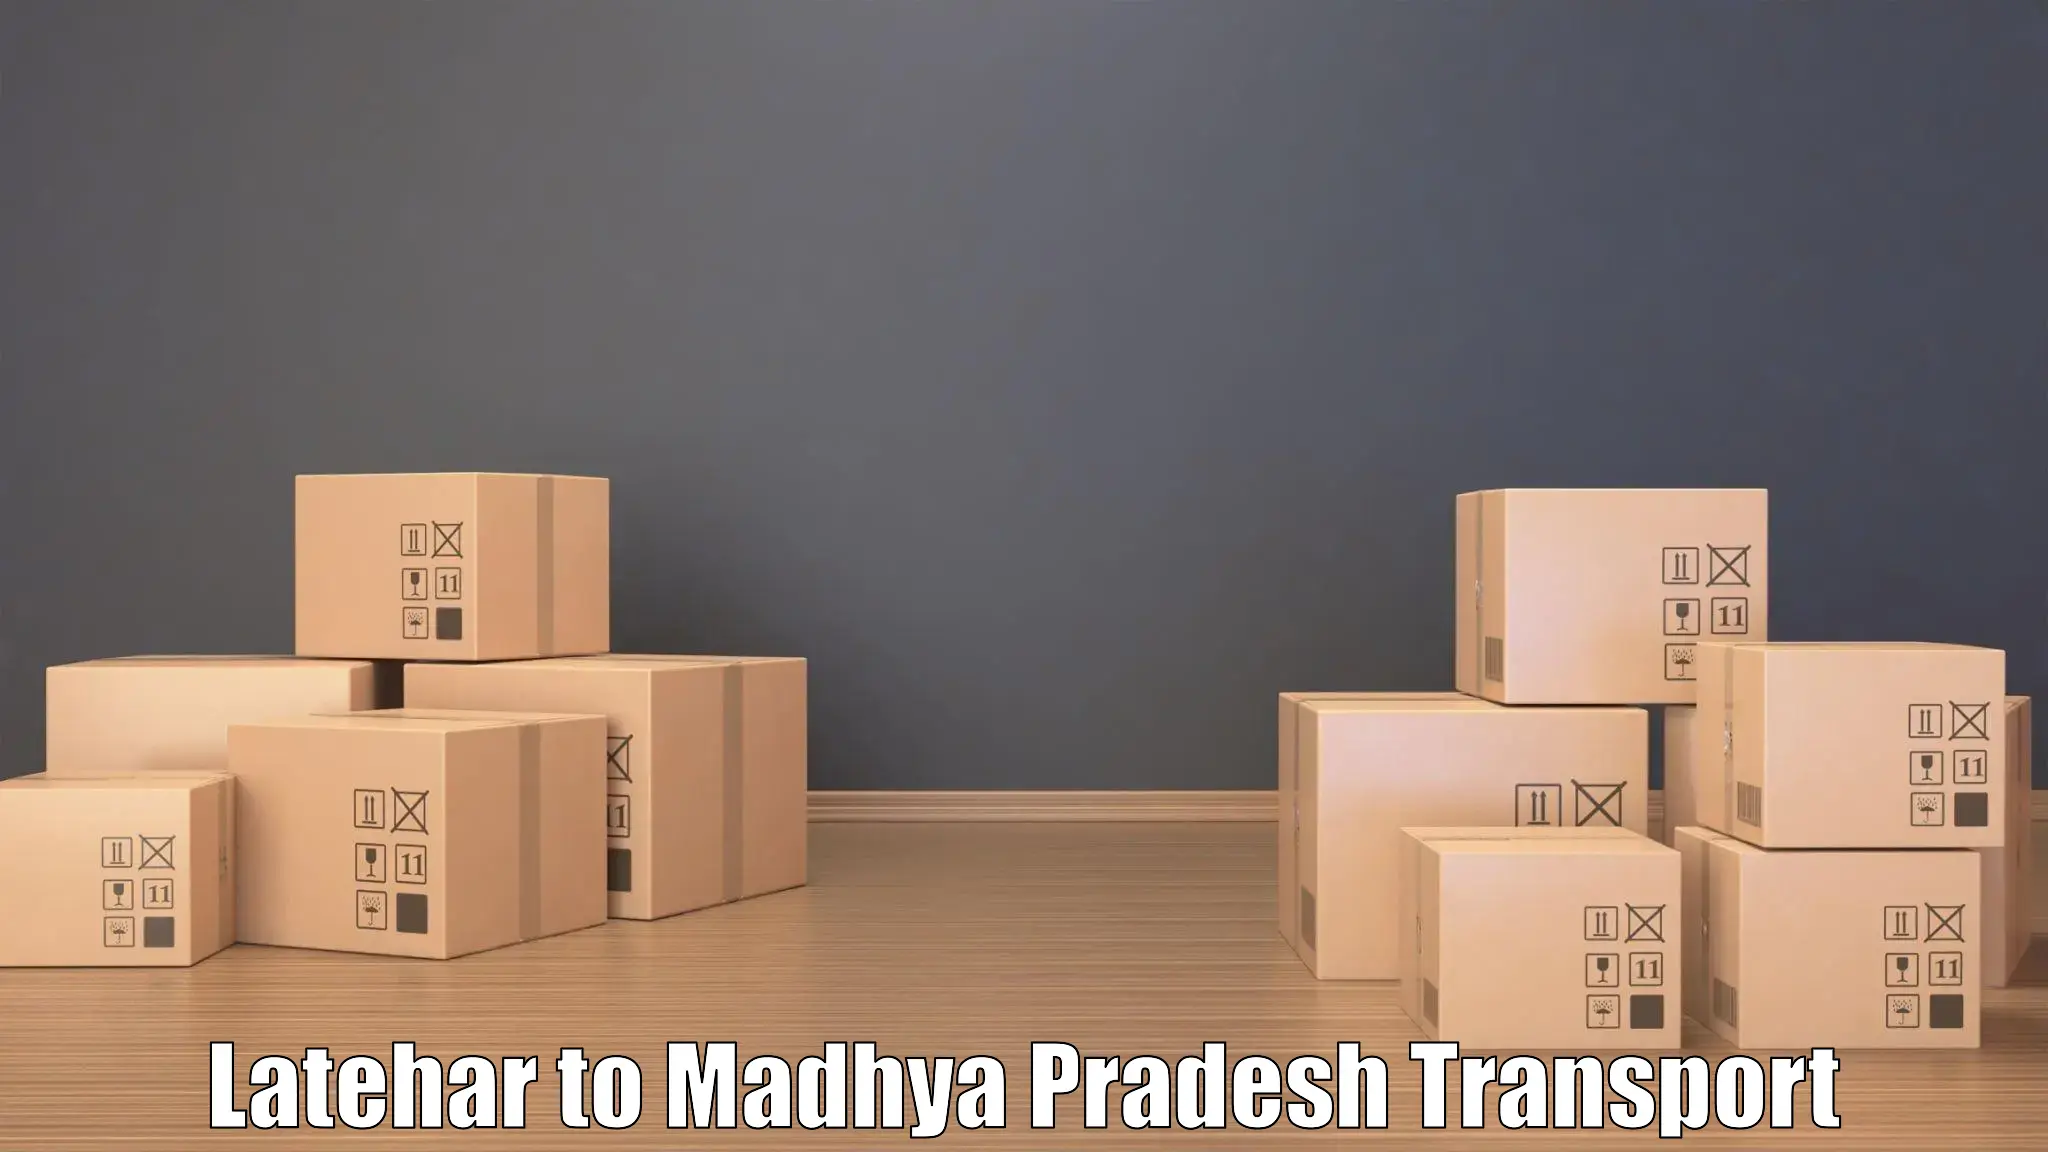 Truck transport companies in India Latehar to Niwari